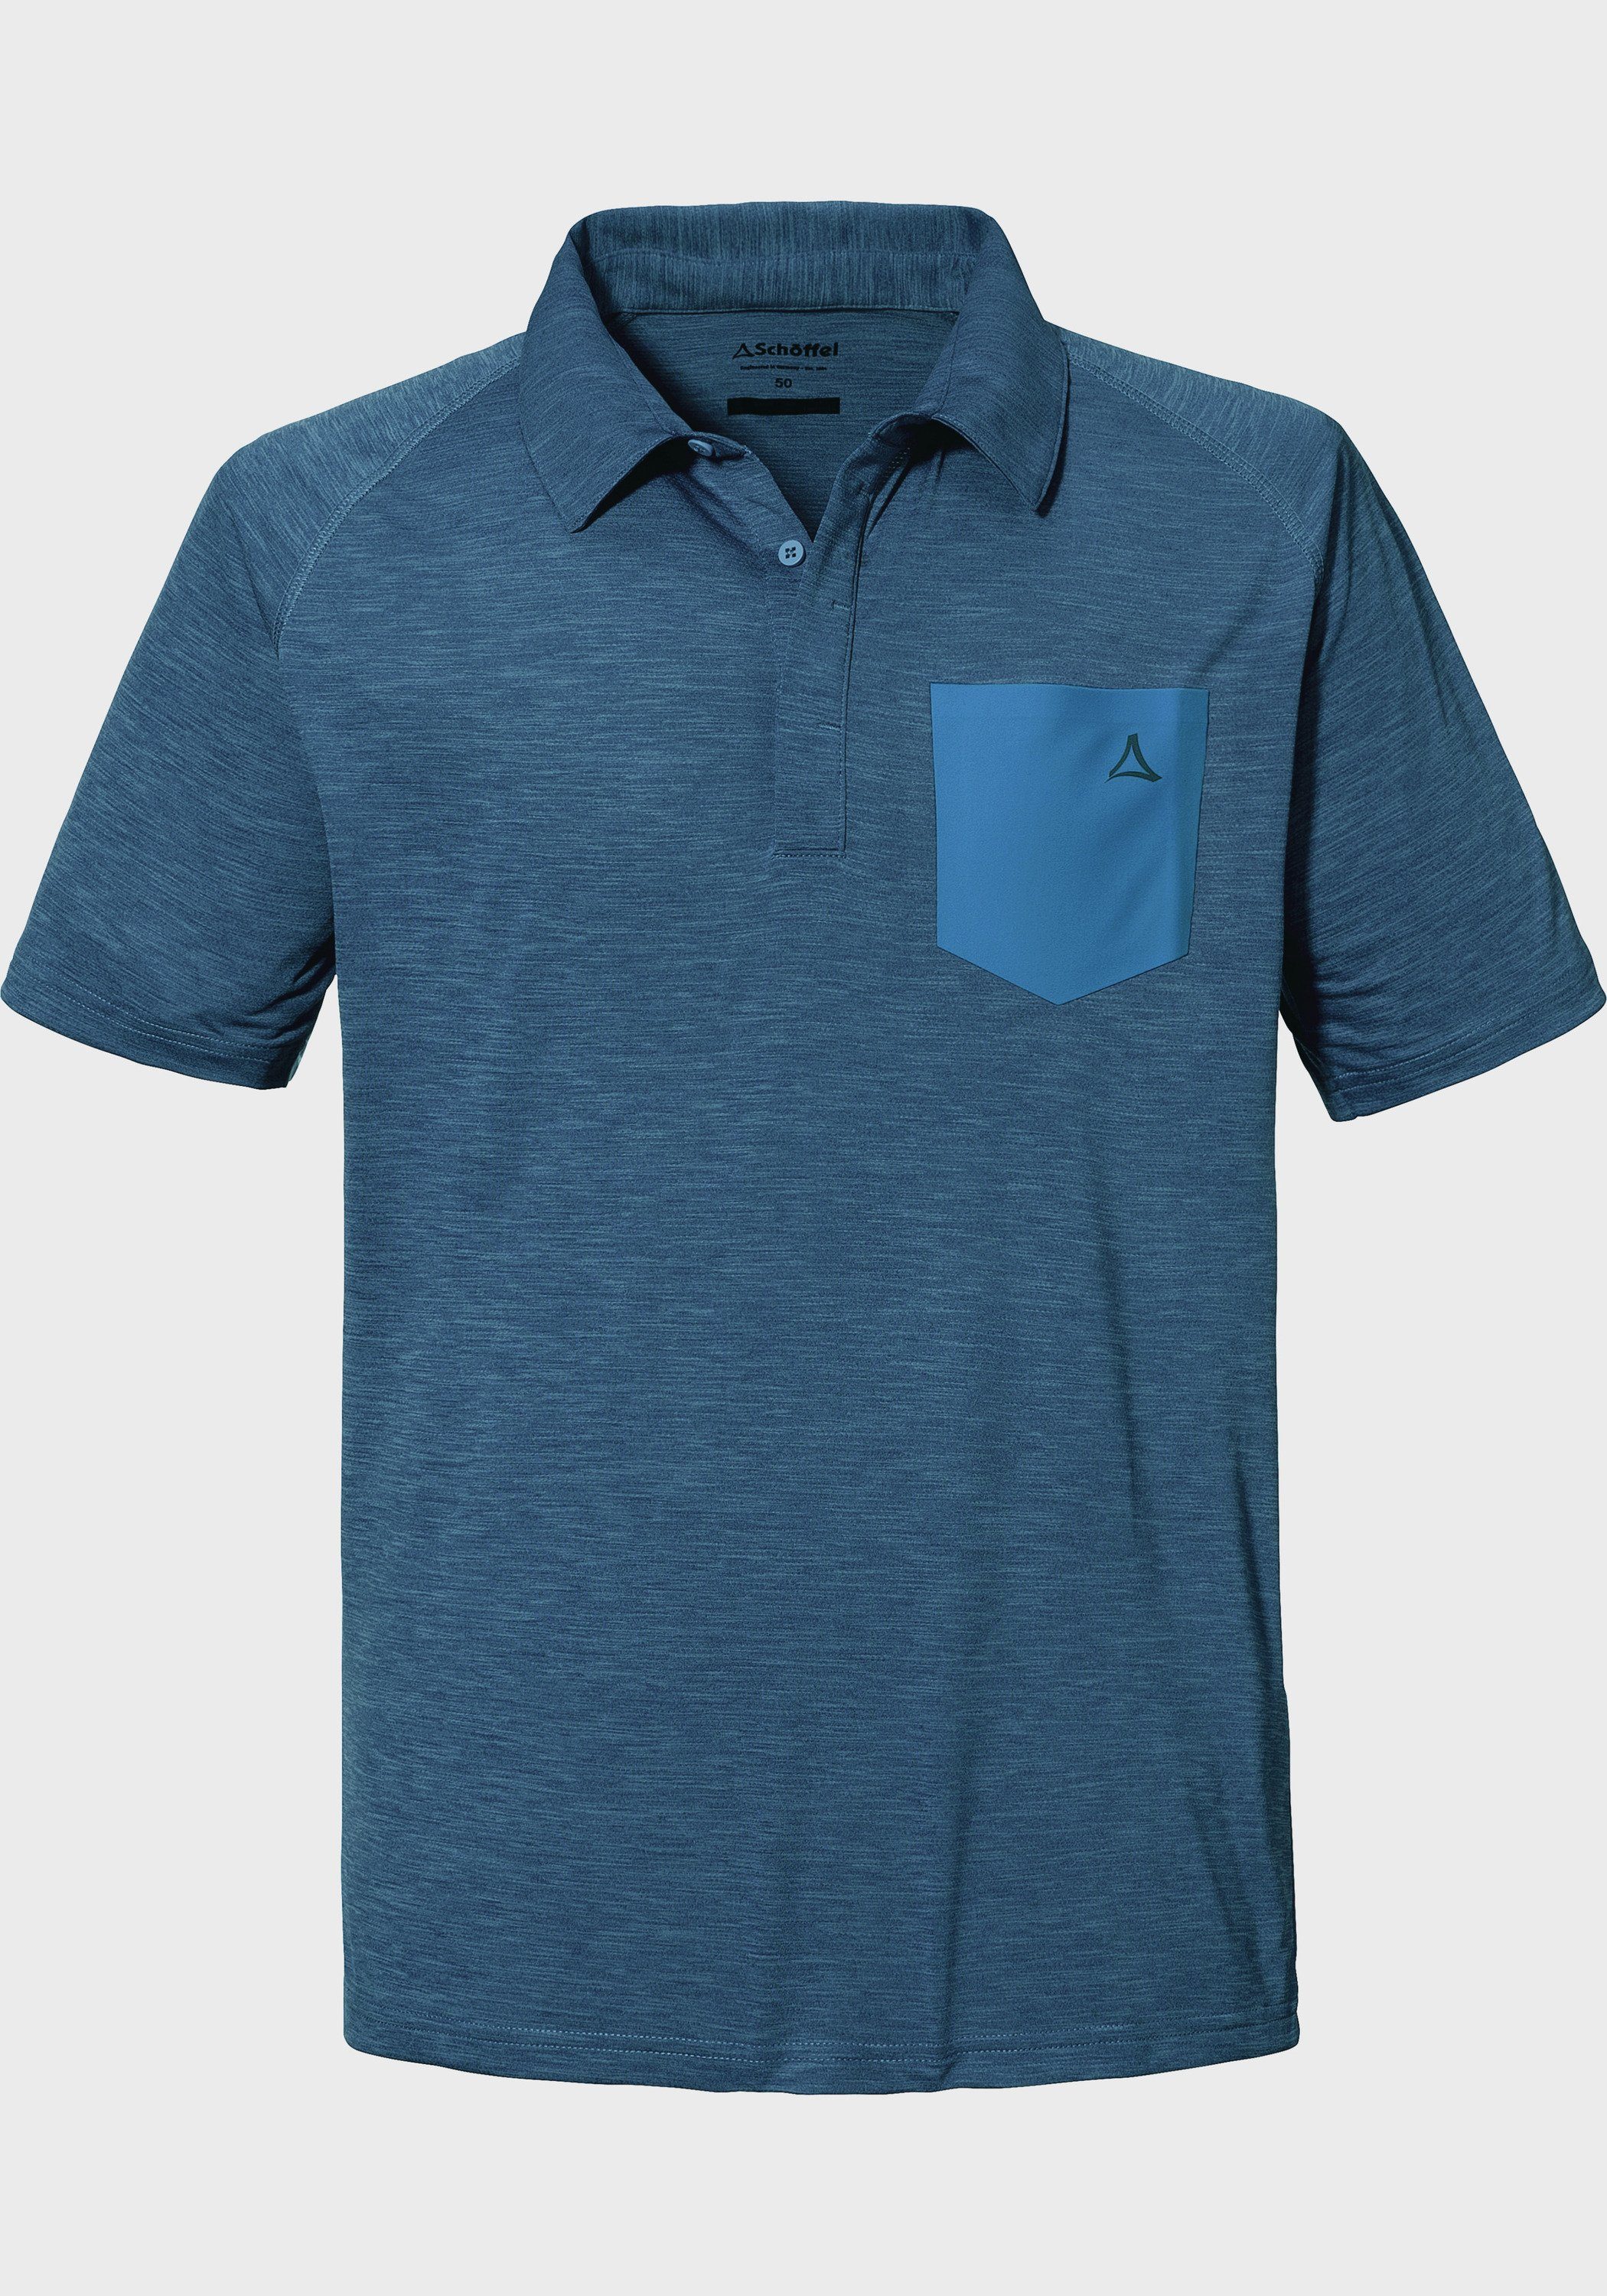 blau M Shirt Poloshirt Polo Hocheck Schöffel